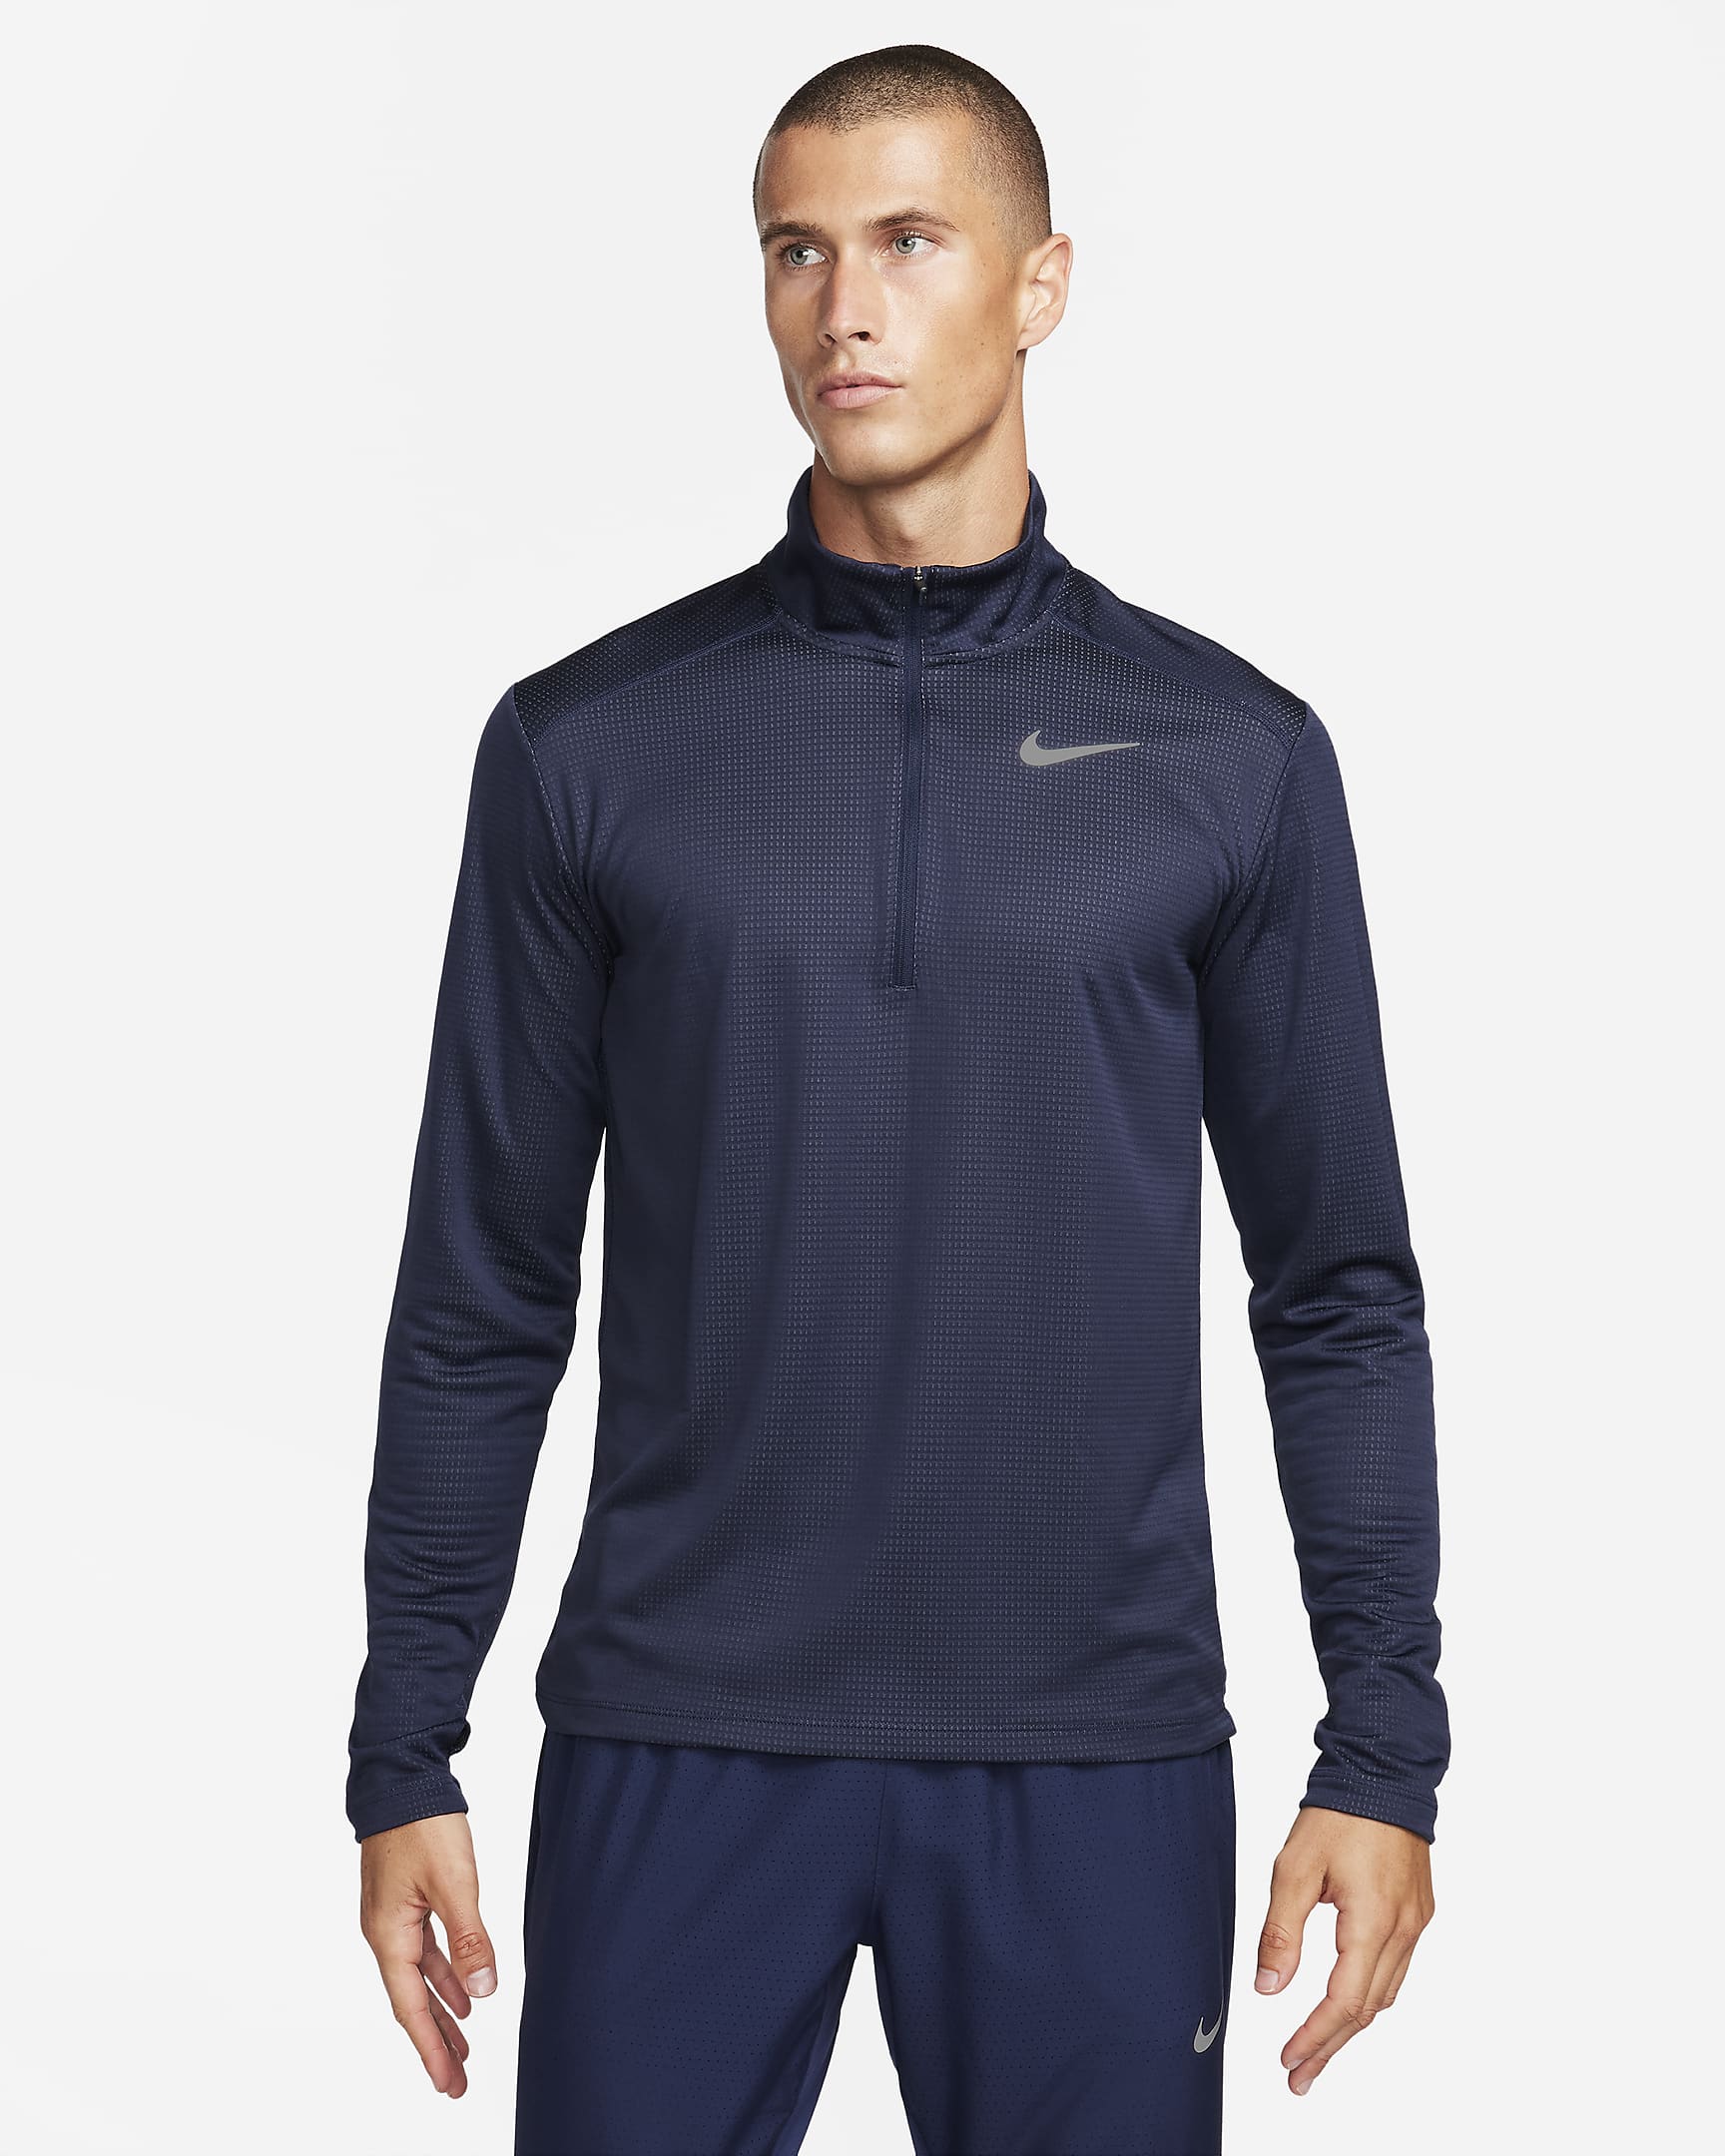 Nike Pacer Men's 1/2-Zip Running Top. Nike ZA